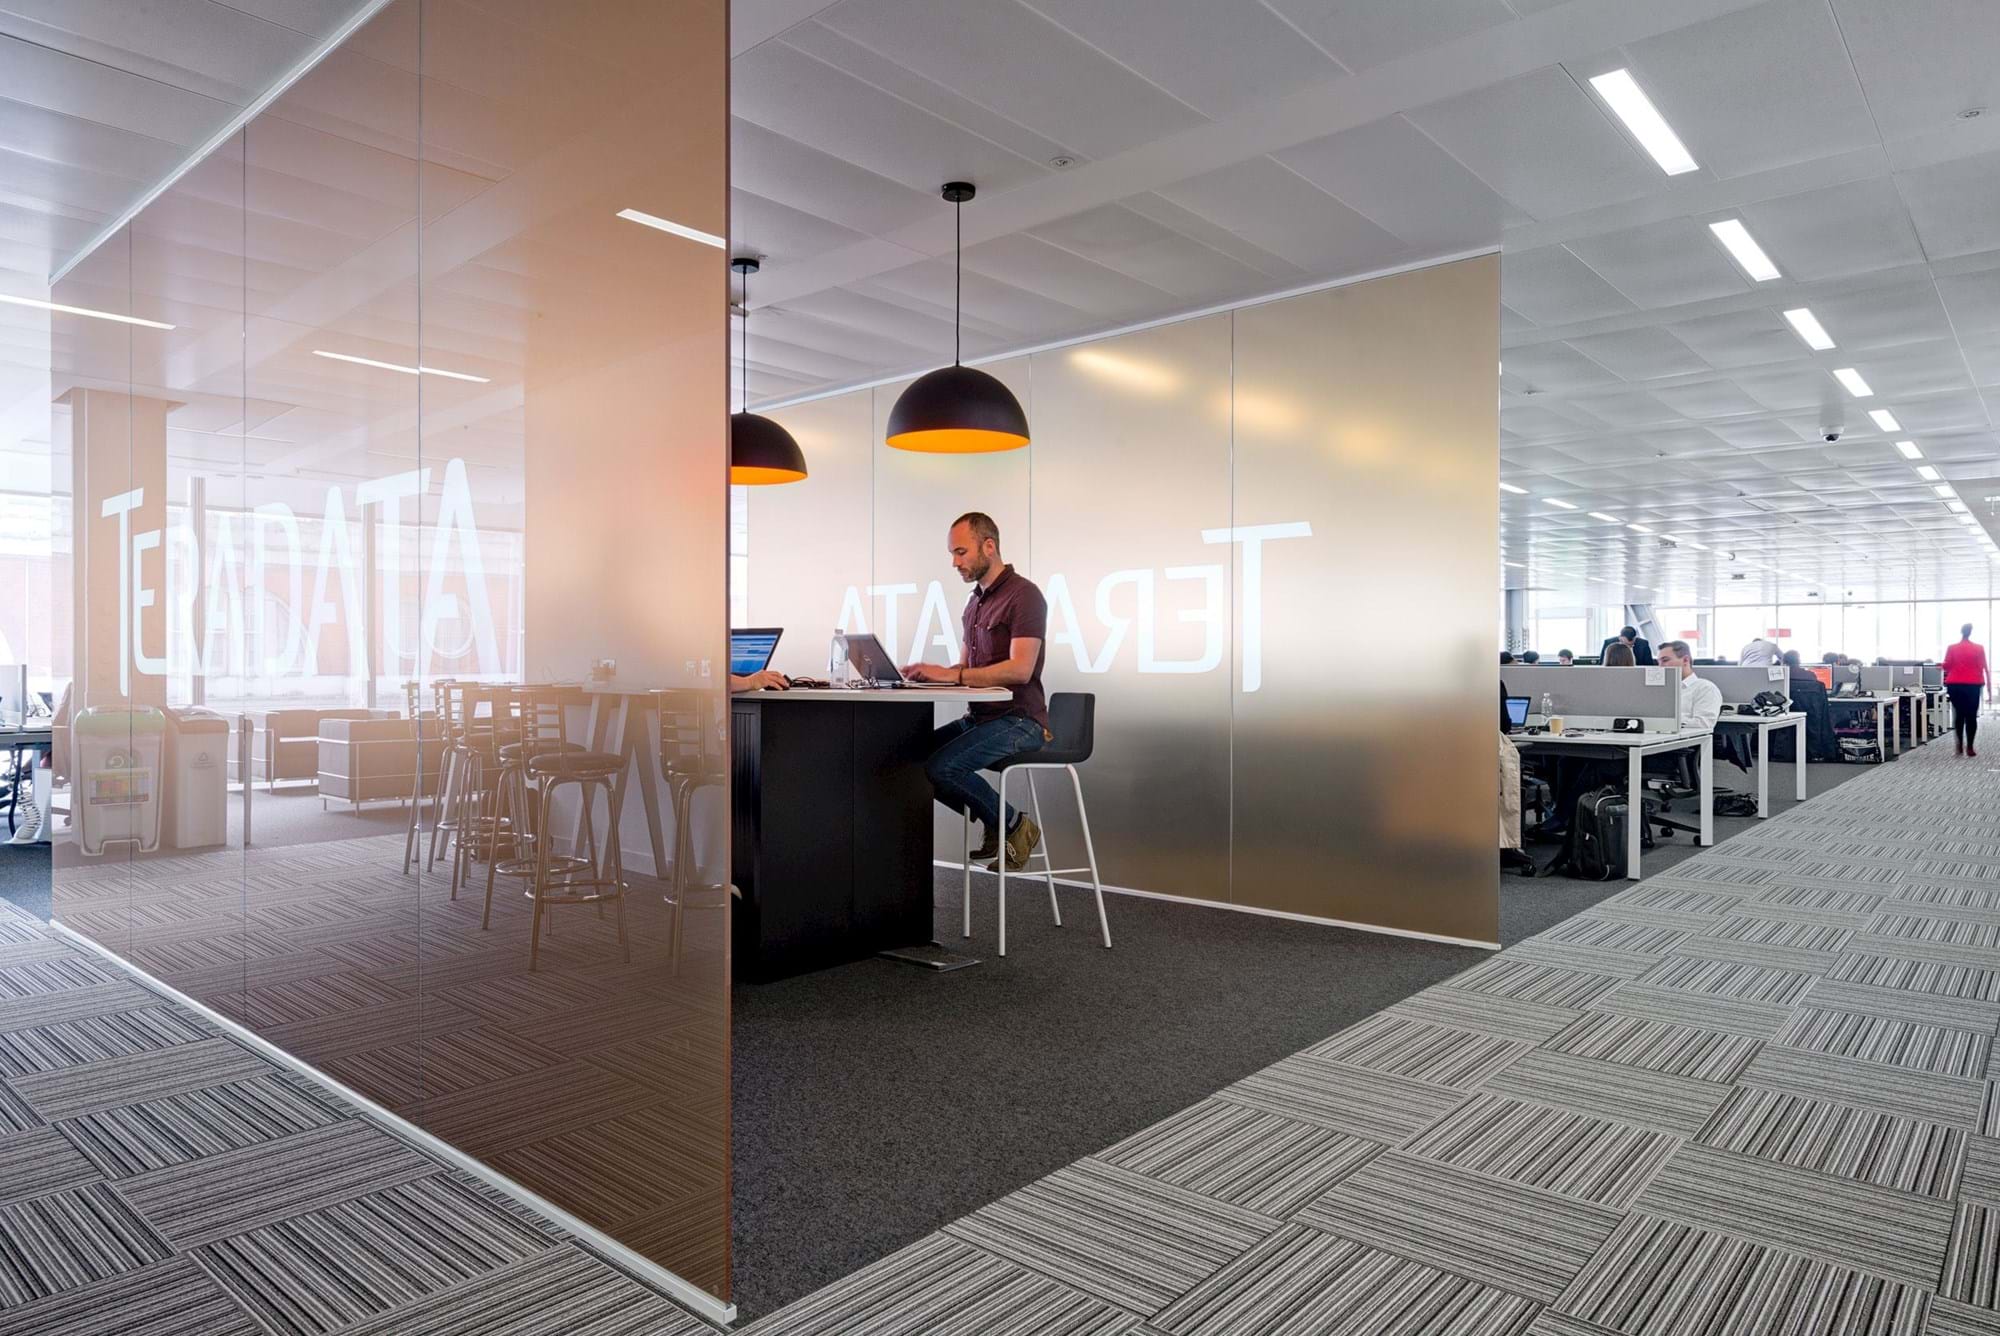 Modus Workspace office design, fit out and refurbishment - Teradata - Breakout - Teradata 02 highres sRGB.jpg